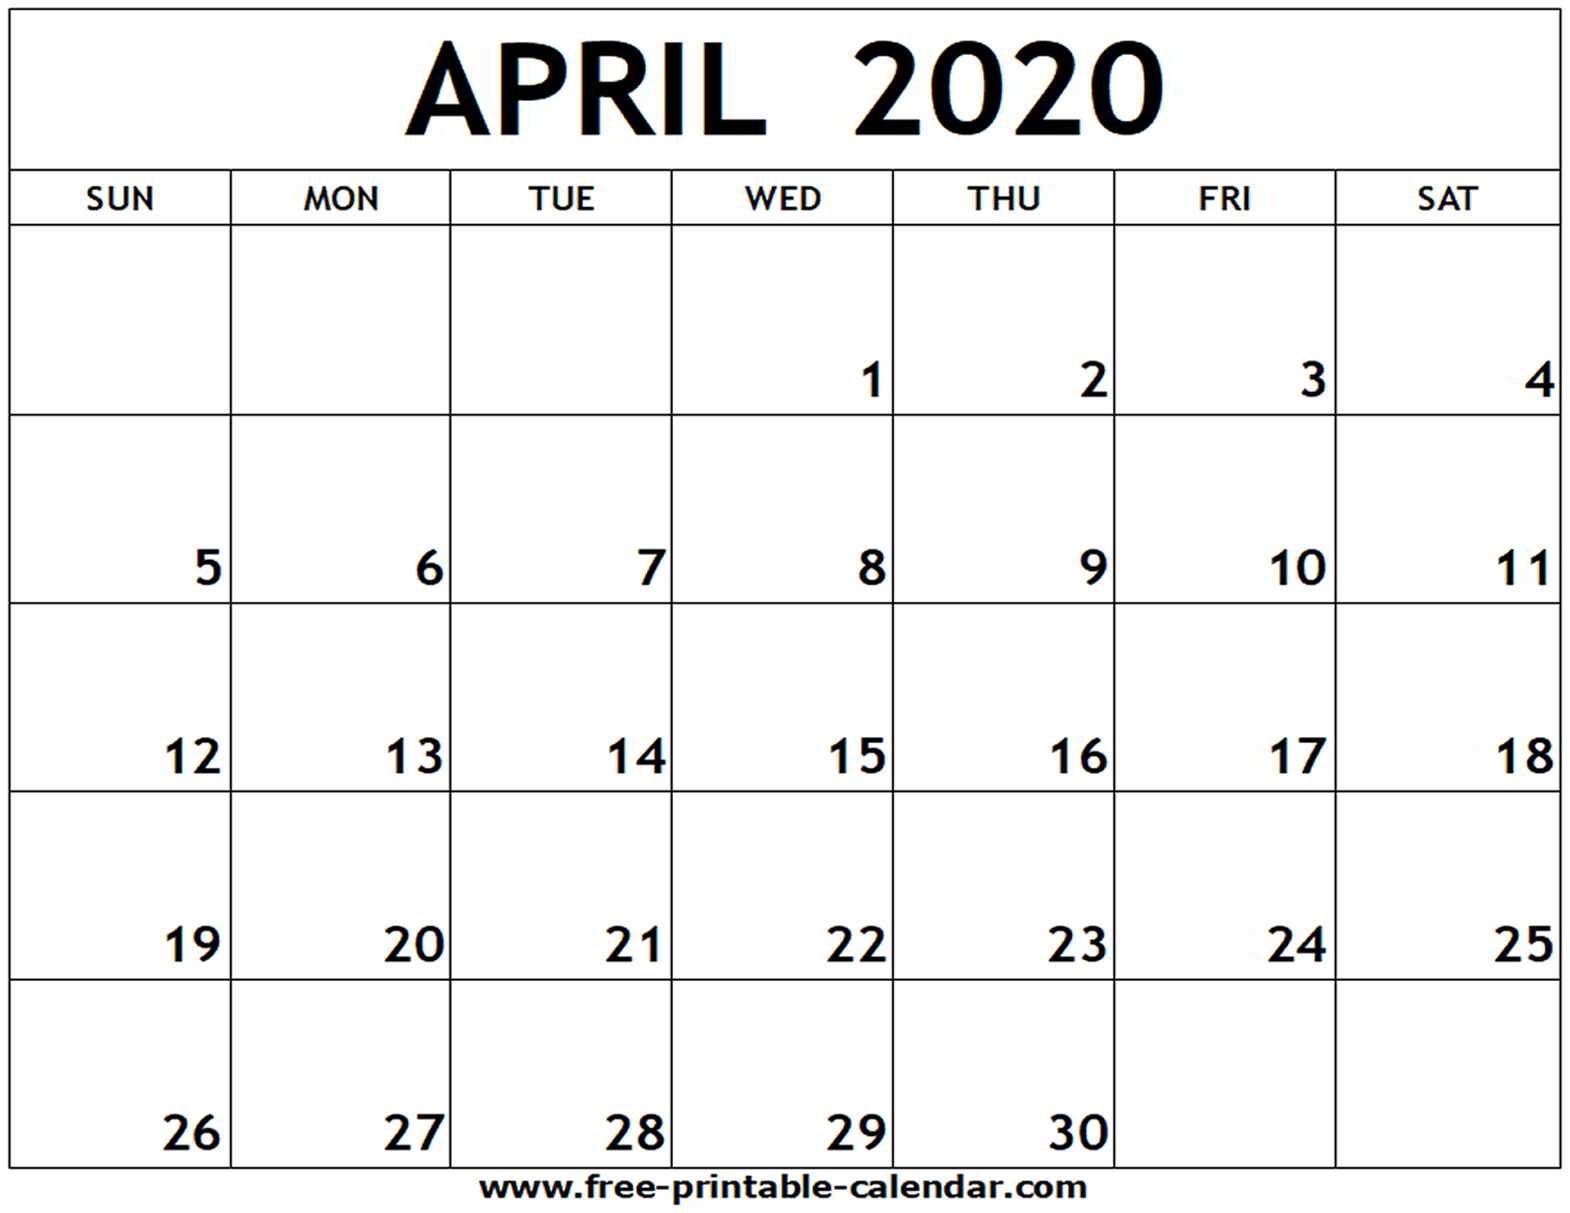 April 2020 Printable Calendar - Free Printable Calendar Regarding Blank Calender Template